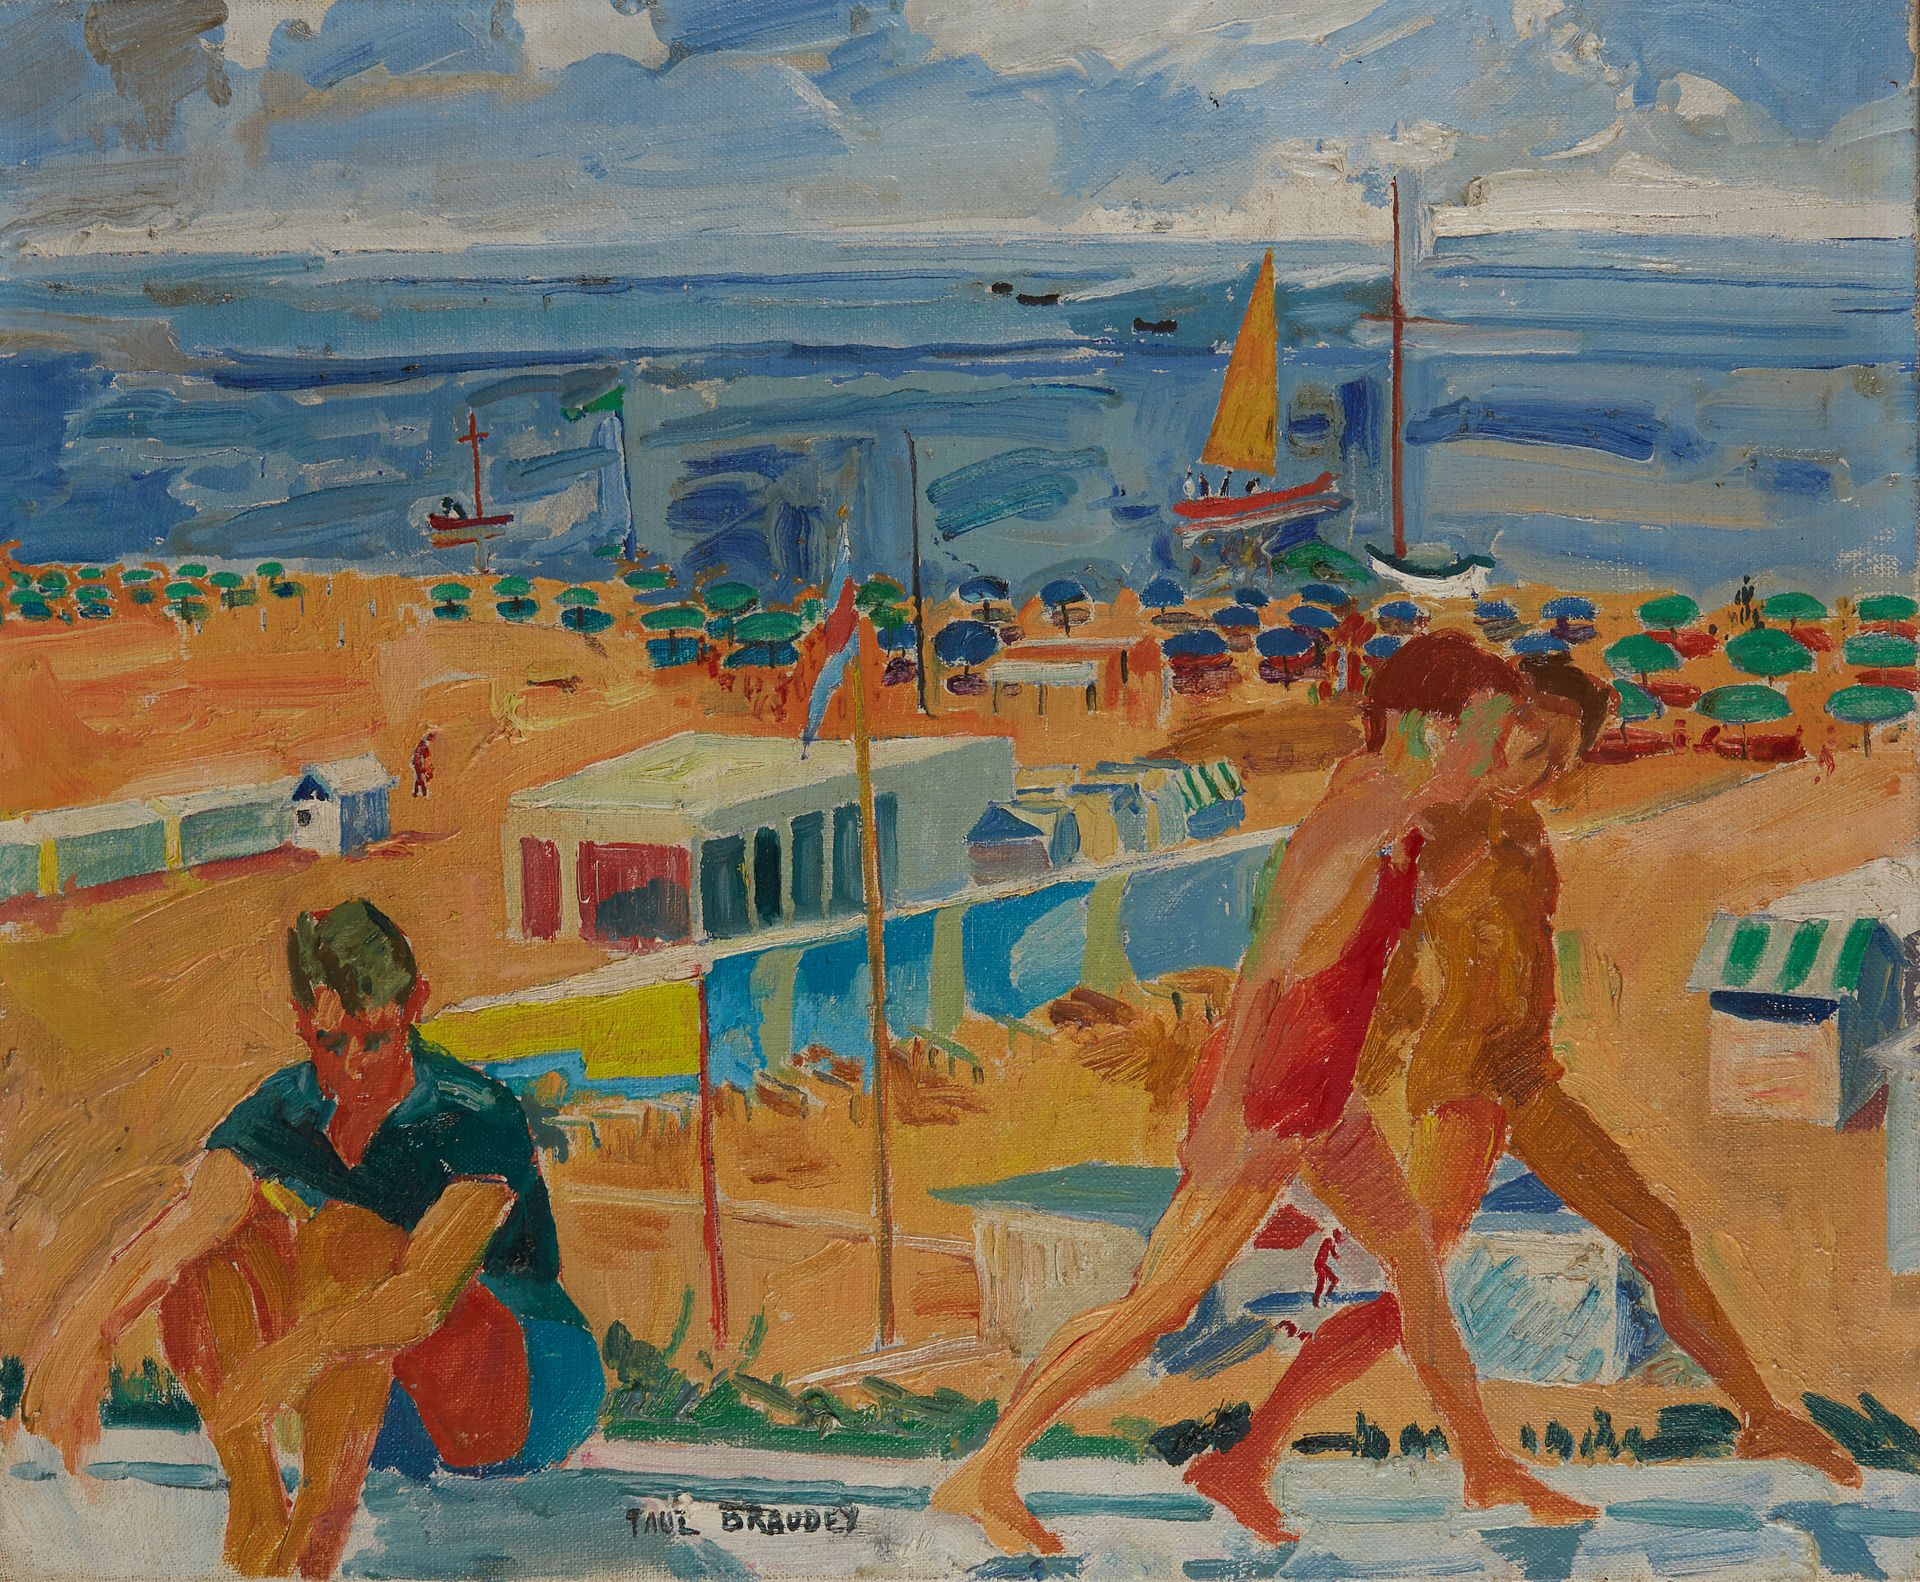 Null Paul BRAUDEY (生于1930年)


海滩》，1969年


画布油画，中央下方有签名，背面有副署和日期


38,5 x 46 cm